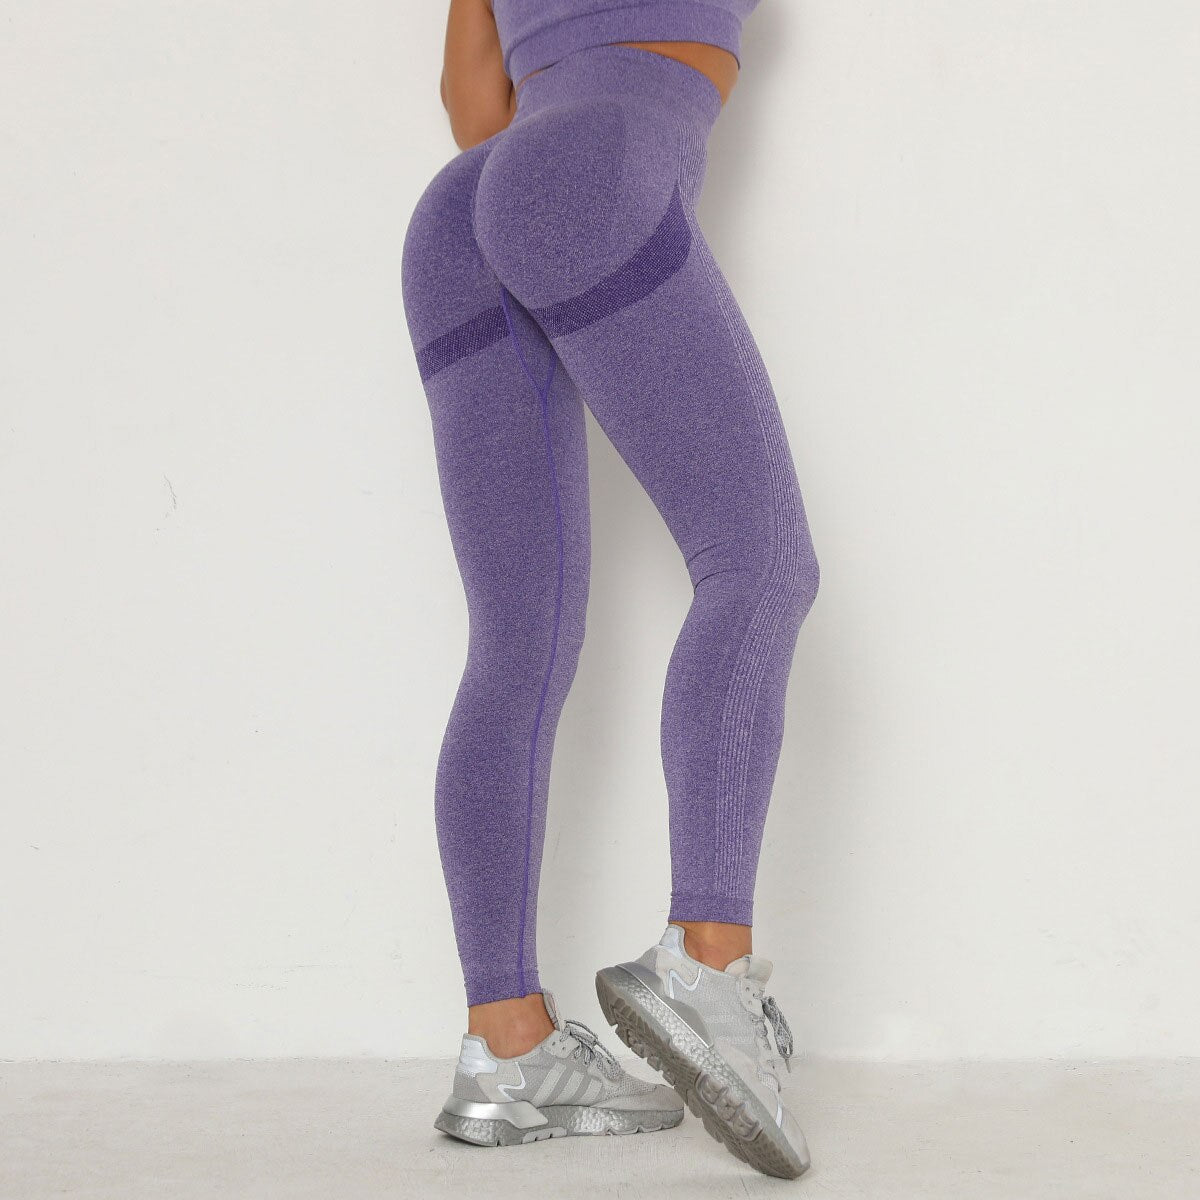 KittenAlarm - Mojoyce Gym Sport Leggings Women Seamless Yoga Pants Fitness Push Up High Waist Tights Workout Running Training Scrunch Leggings Pants